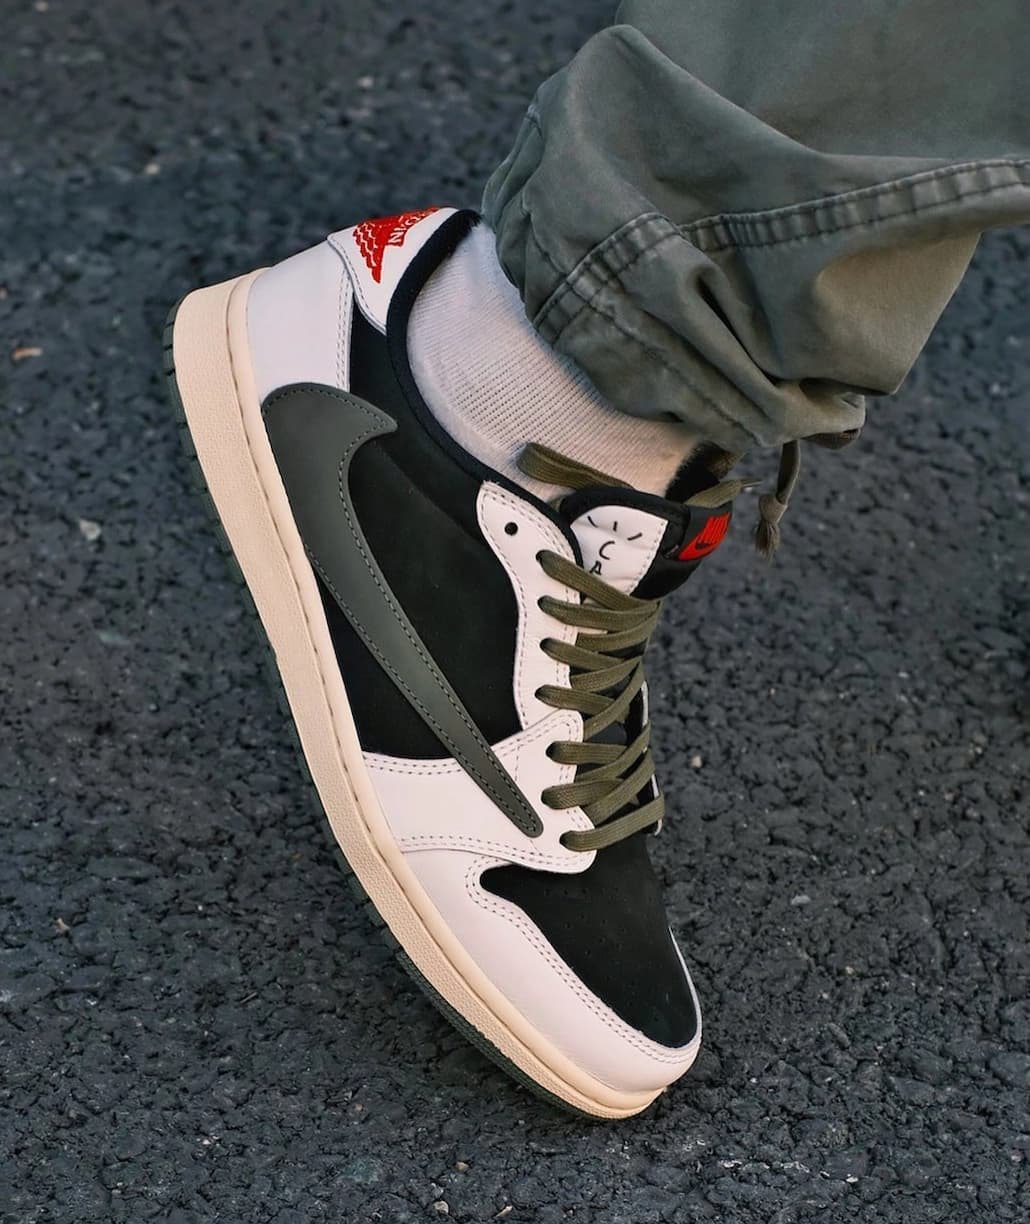 Sneaker Huddle on X: "RAFFLE THREAD ⚡️ Travis Scott x Air Jordan 1 Low 'Olive' All raffles https://t.co/cReNyEf1c4" X